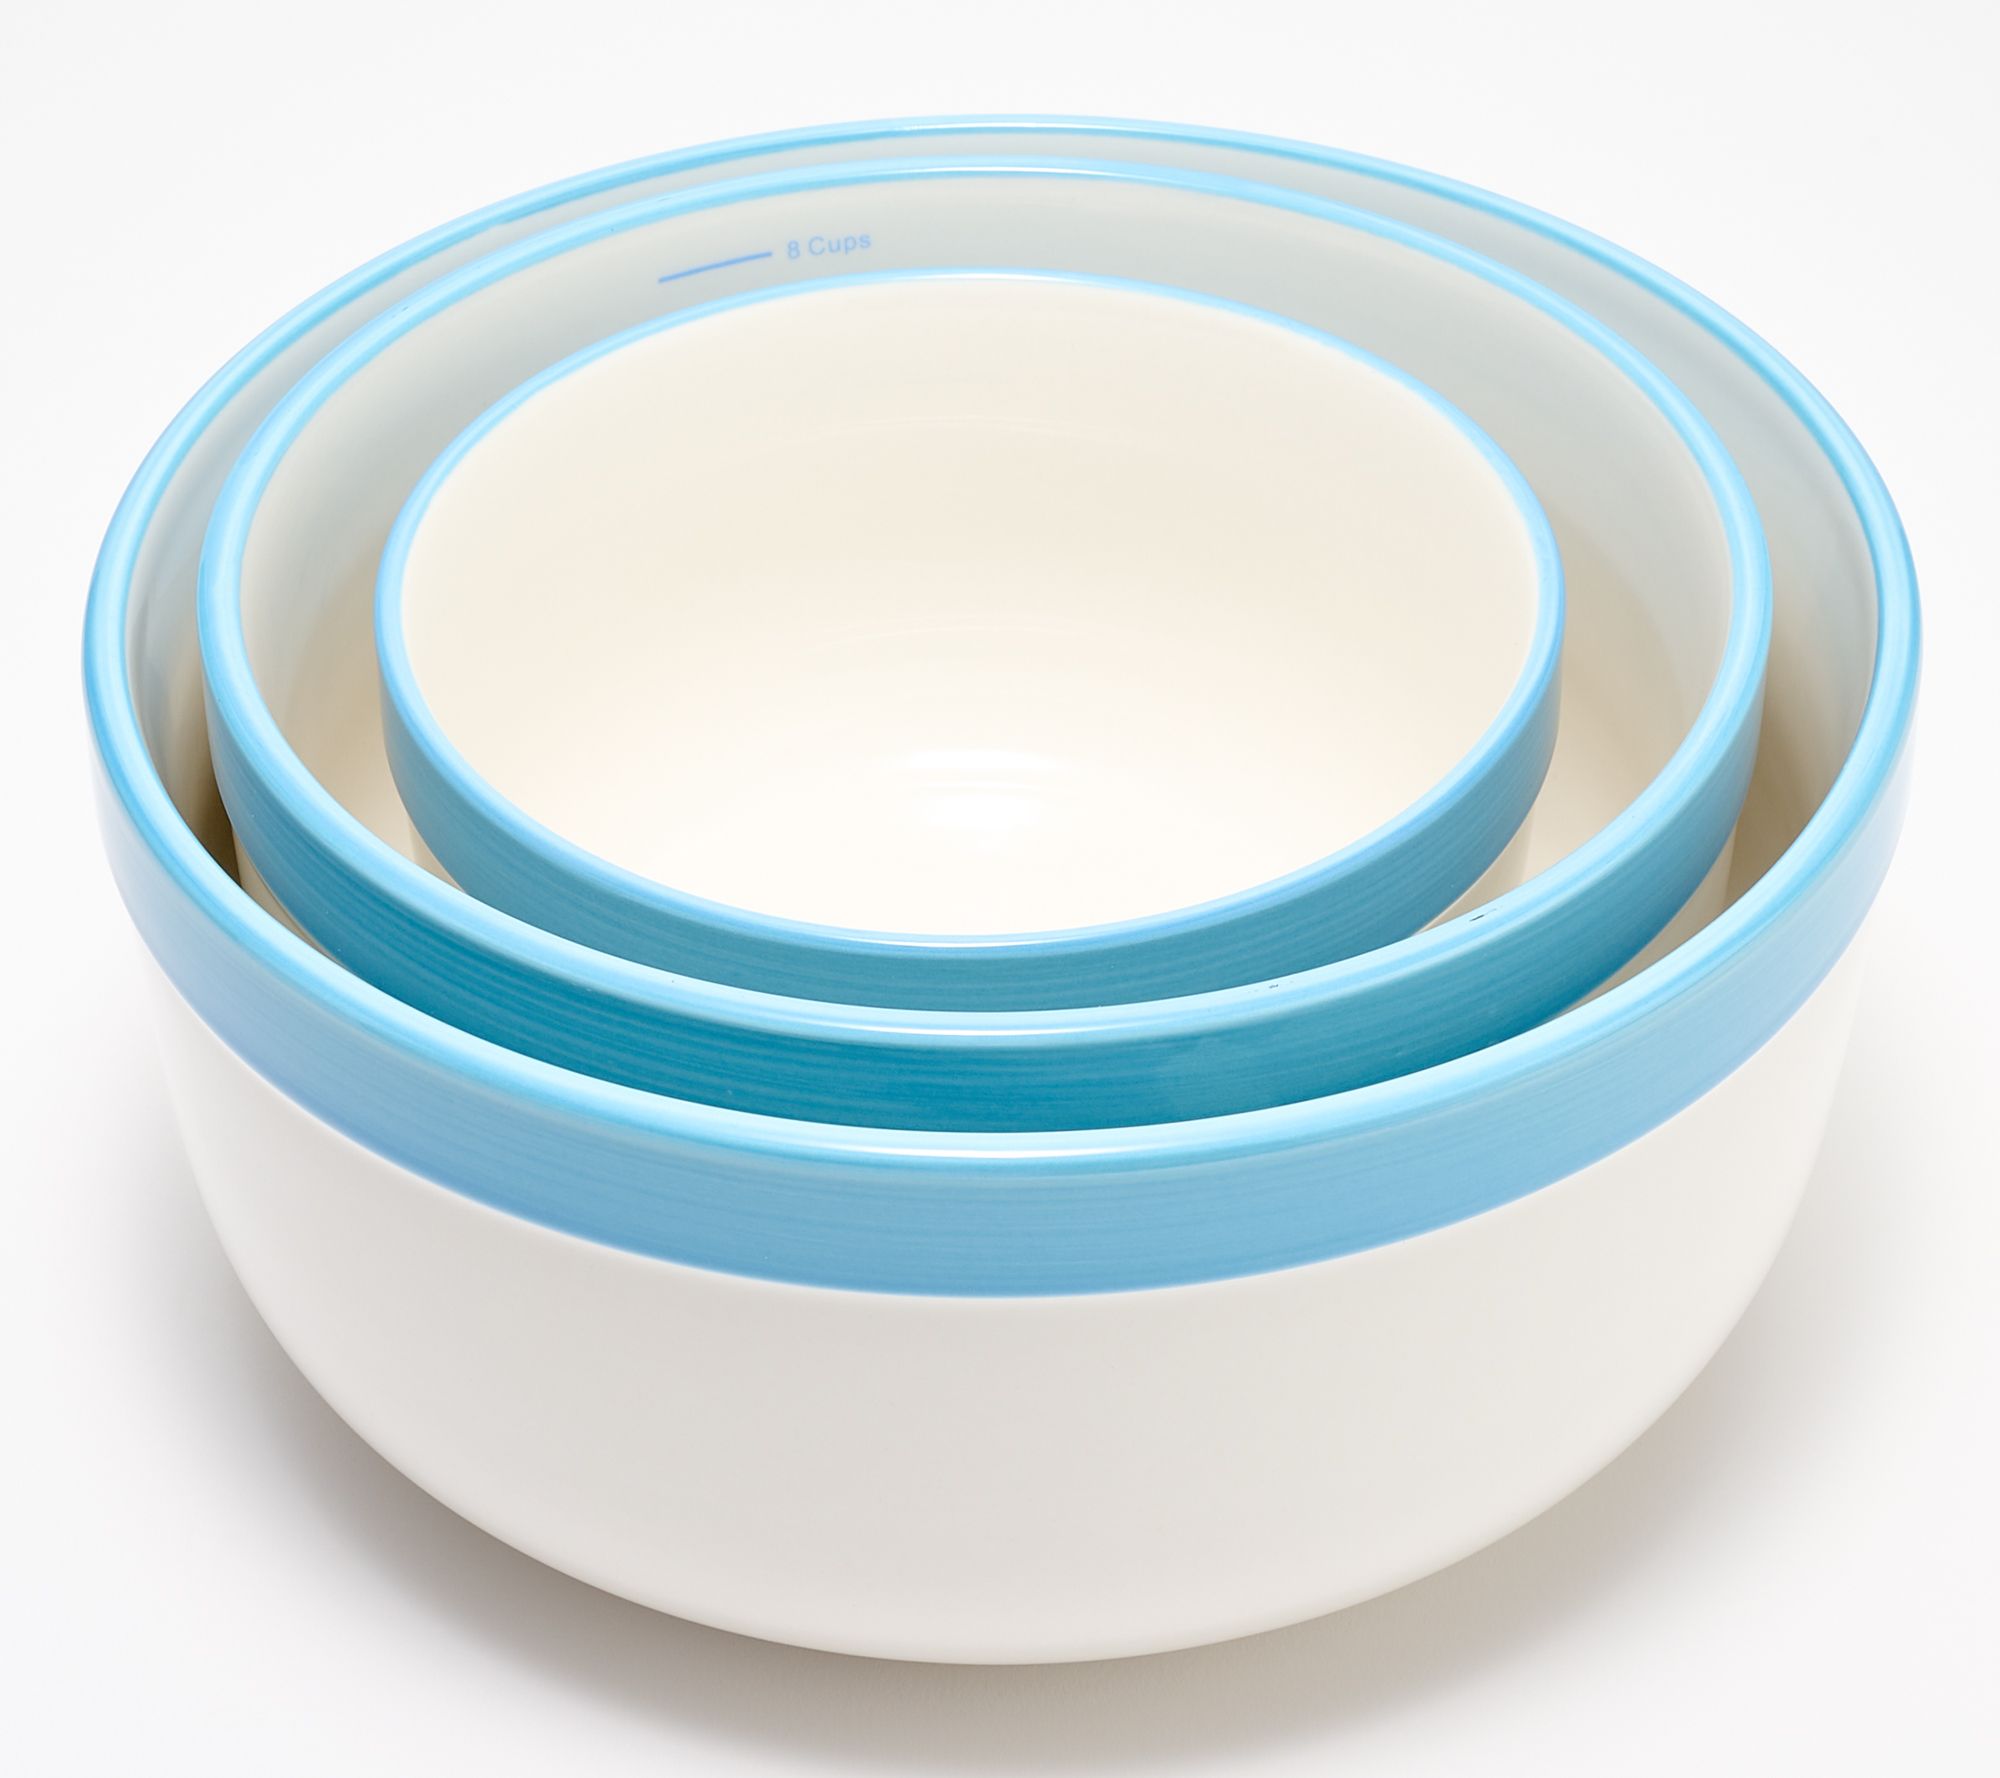 KitchenAid Set of 3 Non-Slip Mixing Bowls on QVC 